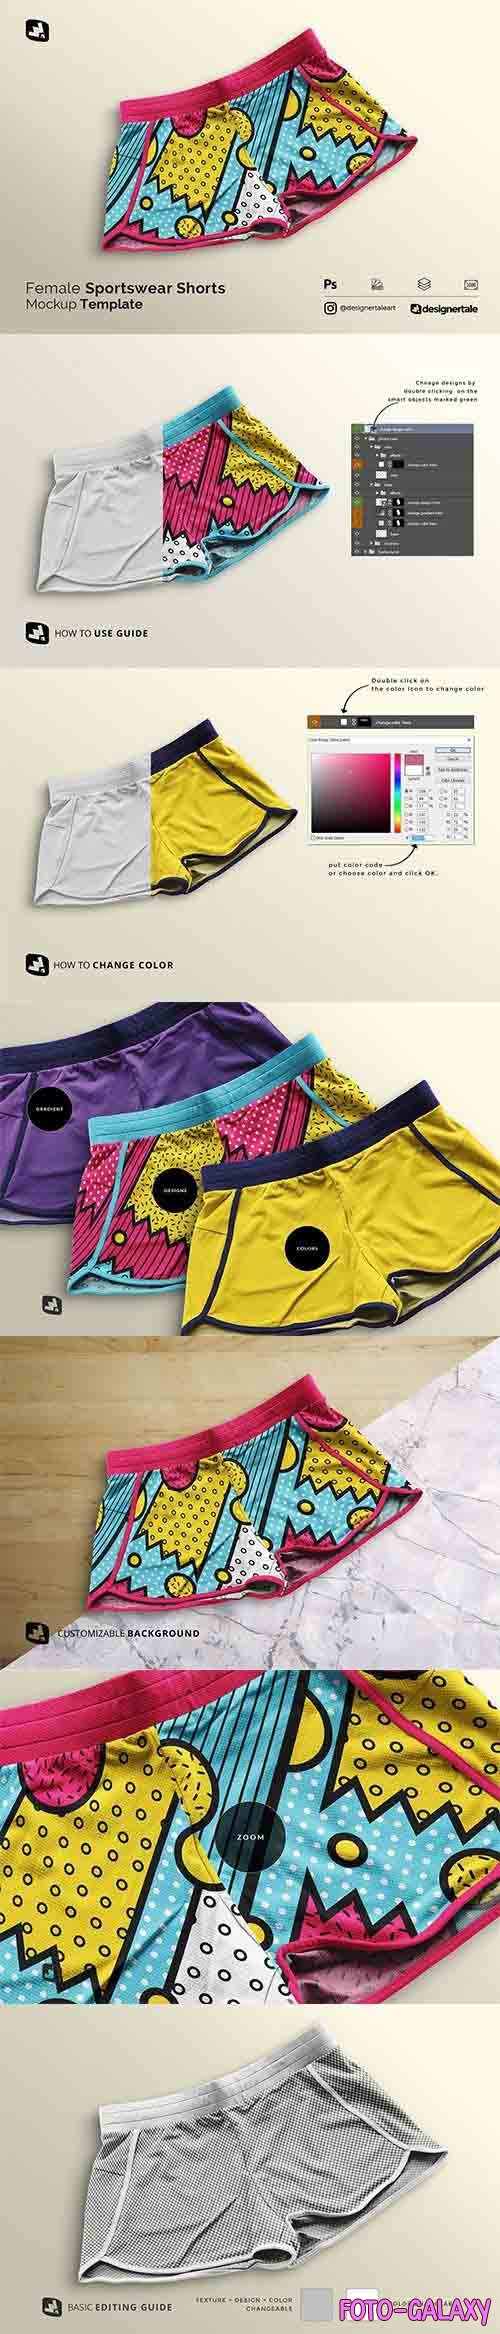 CreativeMarket - Female Sportswear Shorts Mockup 5357877